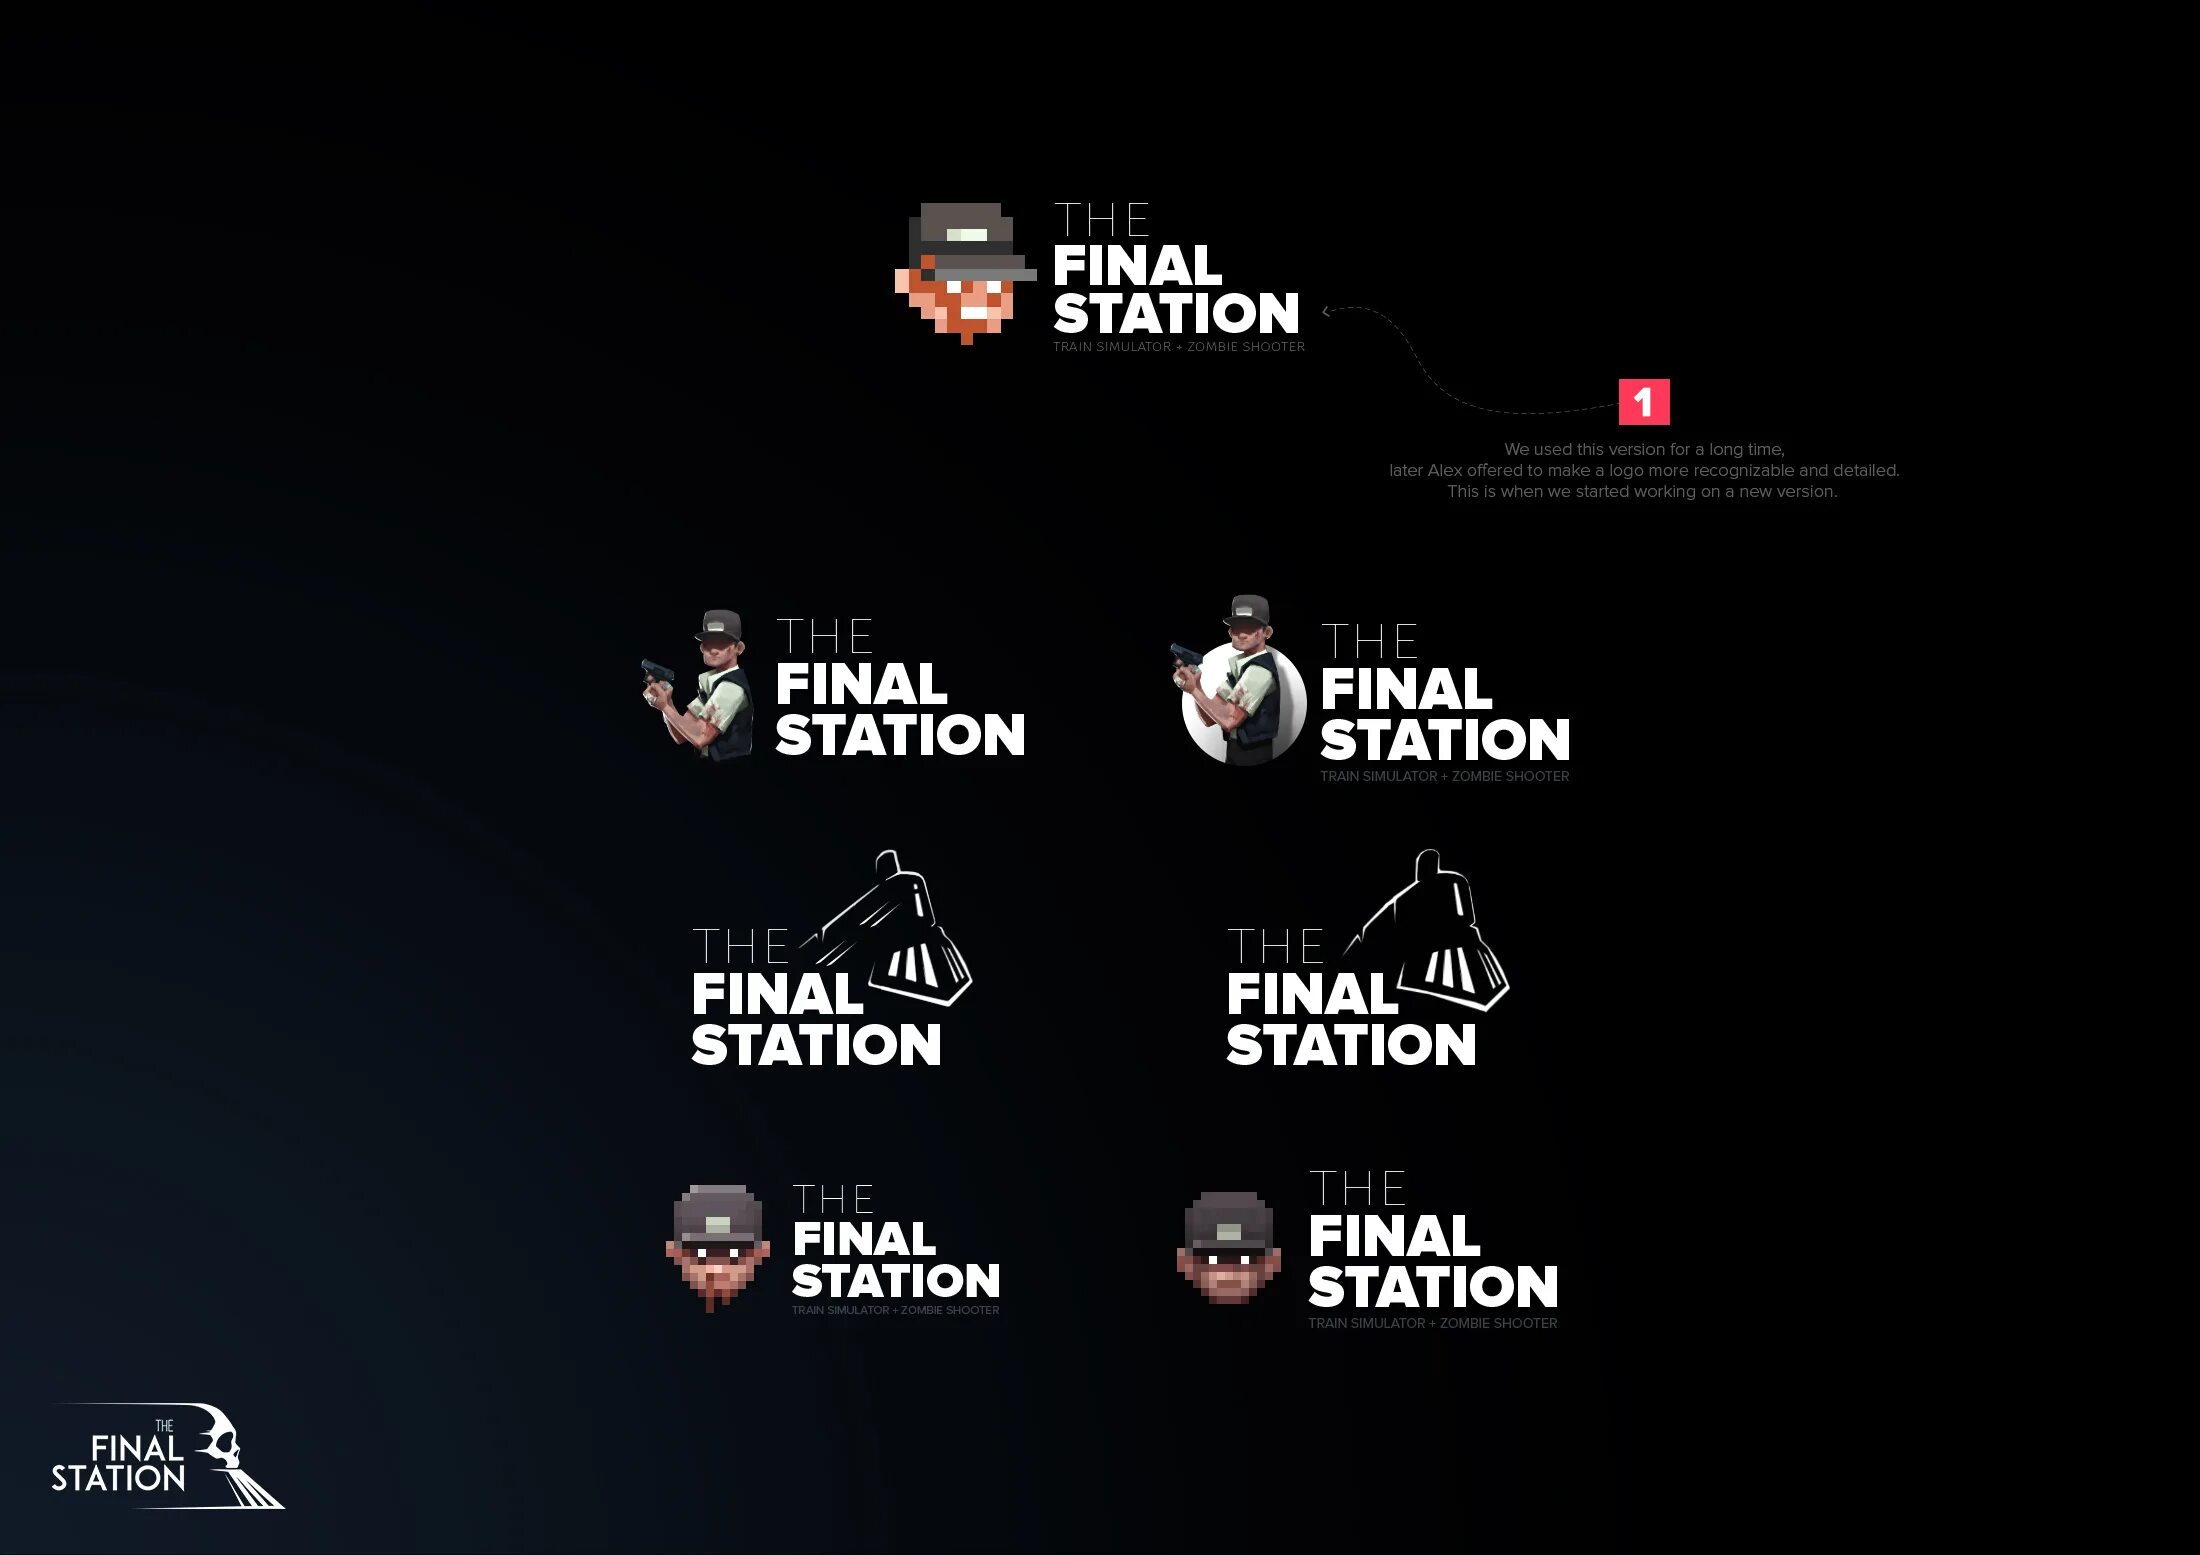 The finals как пригласить. The Final Station. The Final Station артбук. The Final Station Страж. Final Station игра.